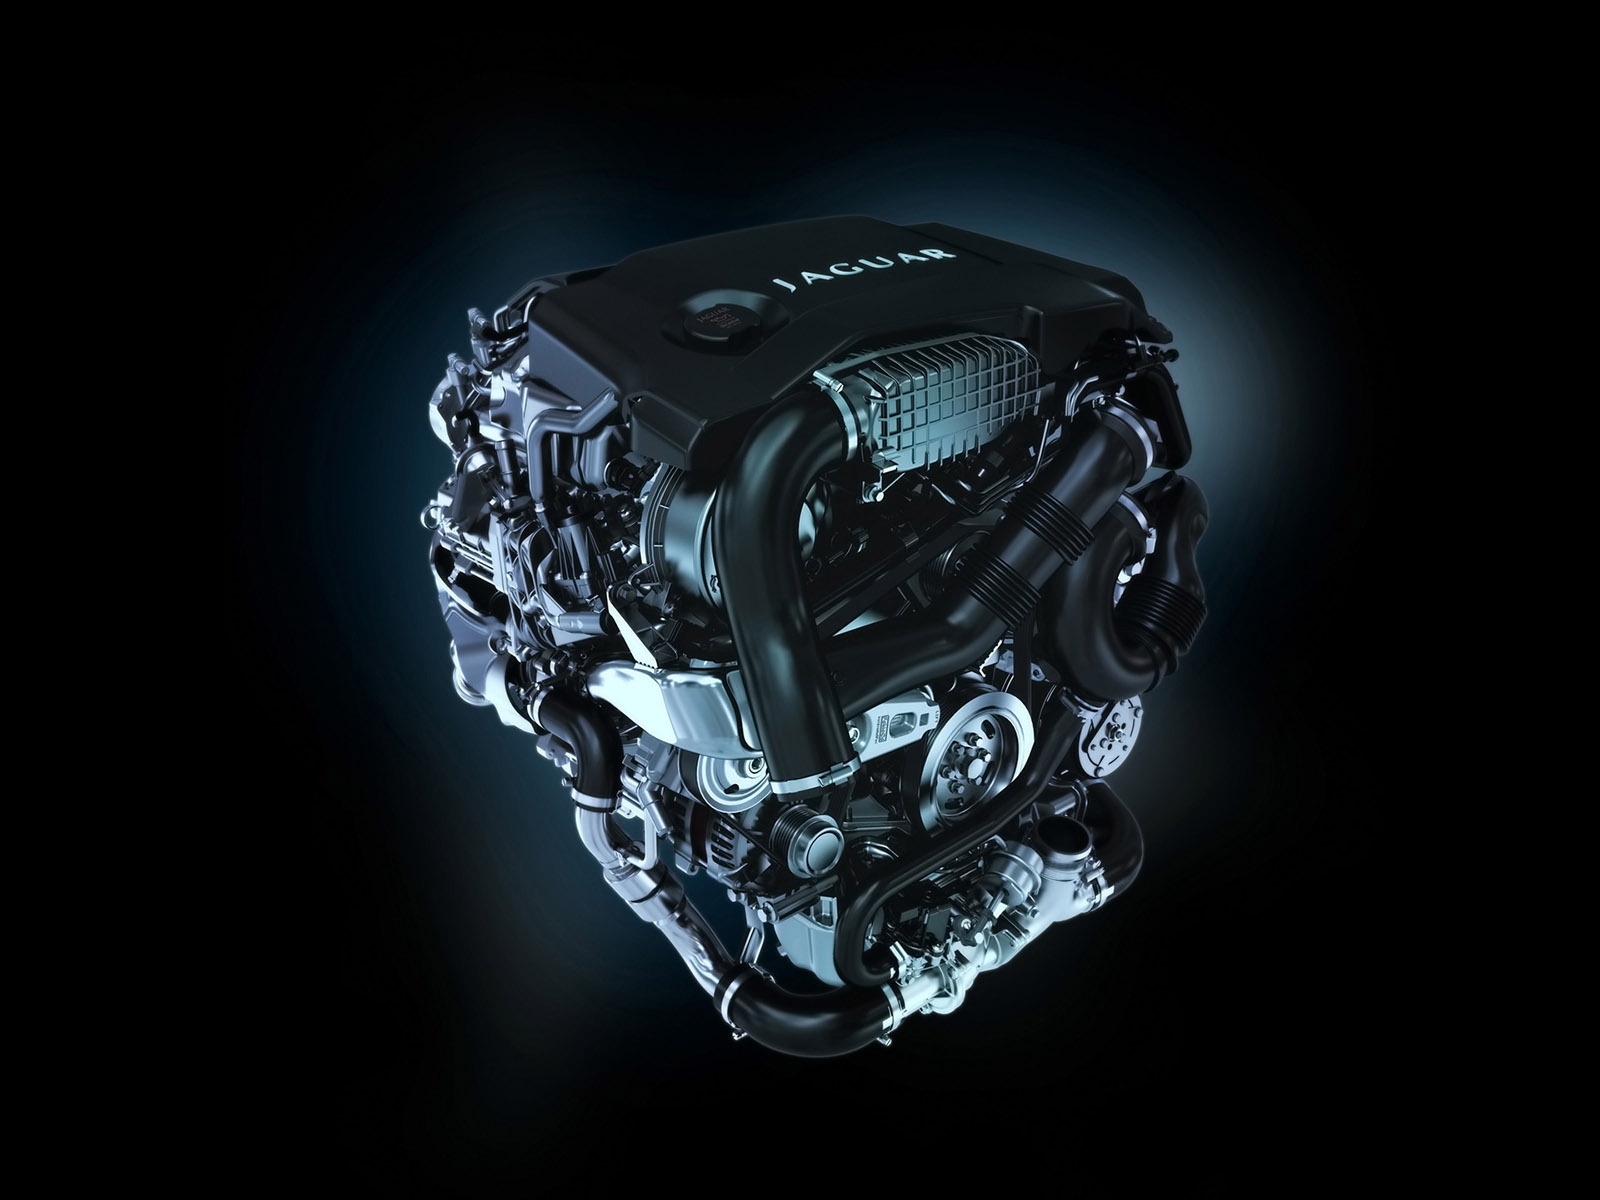 Jaguar XF Diesel S Engine for 1600 x 1200 resolution